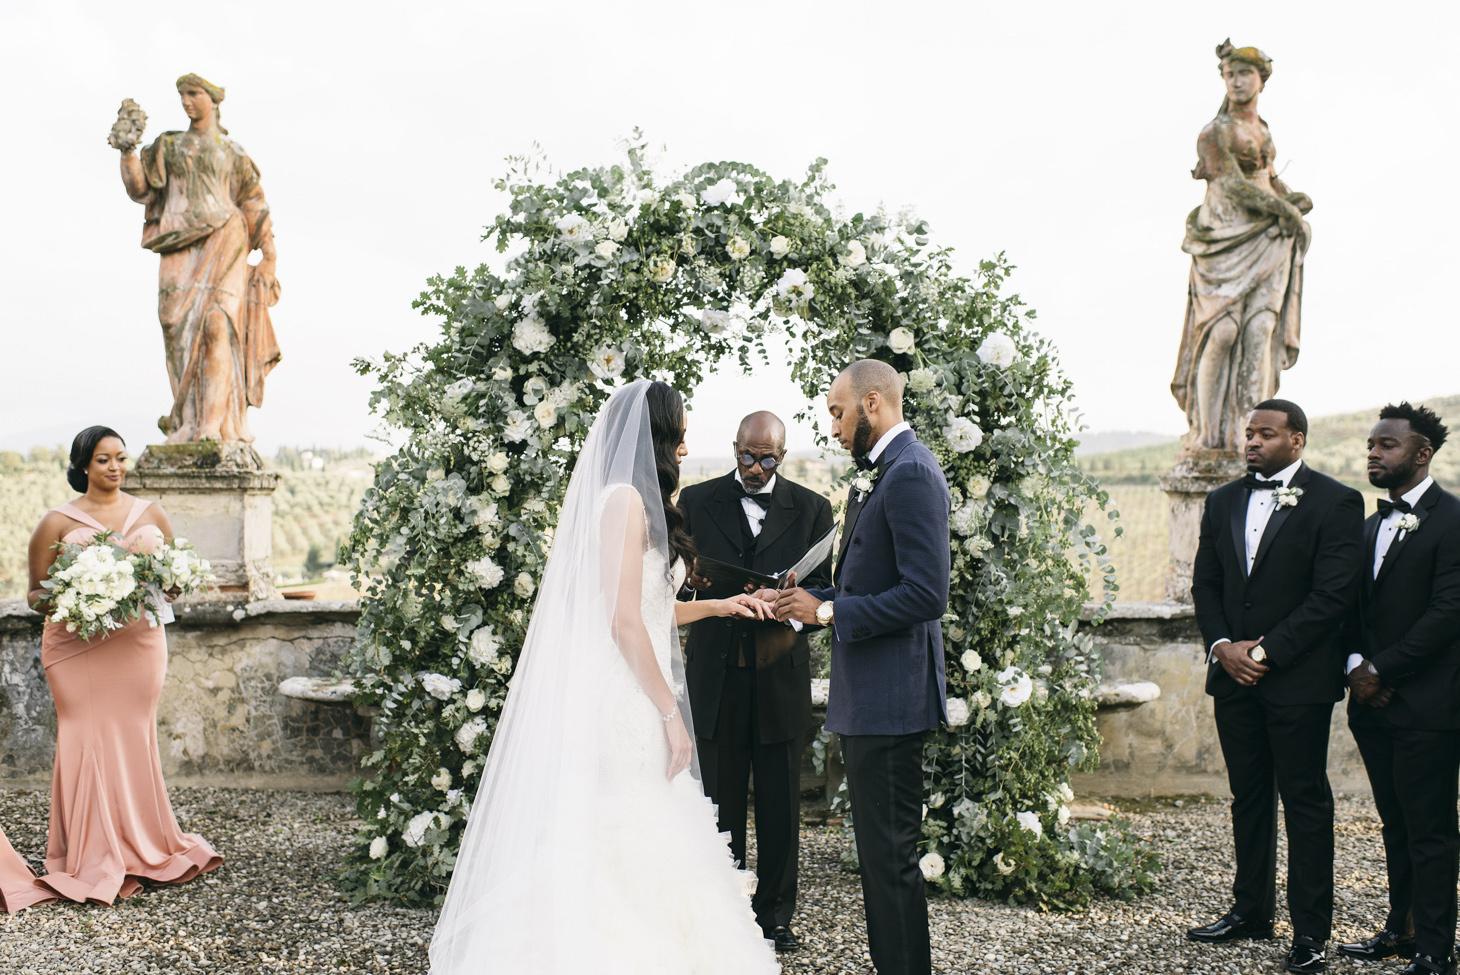 Outdoor wedding ceremony at Villa Corsini